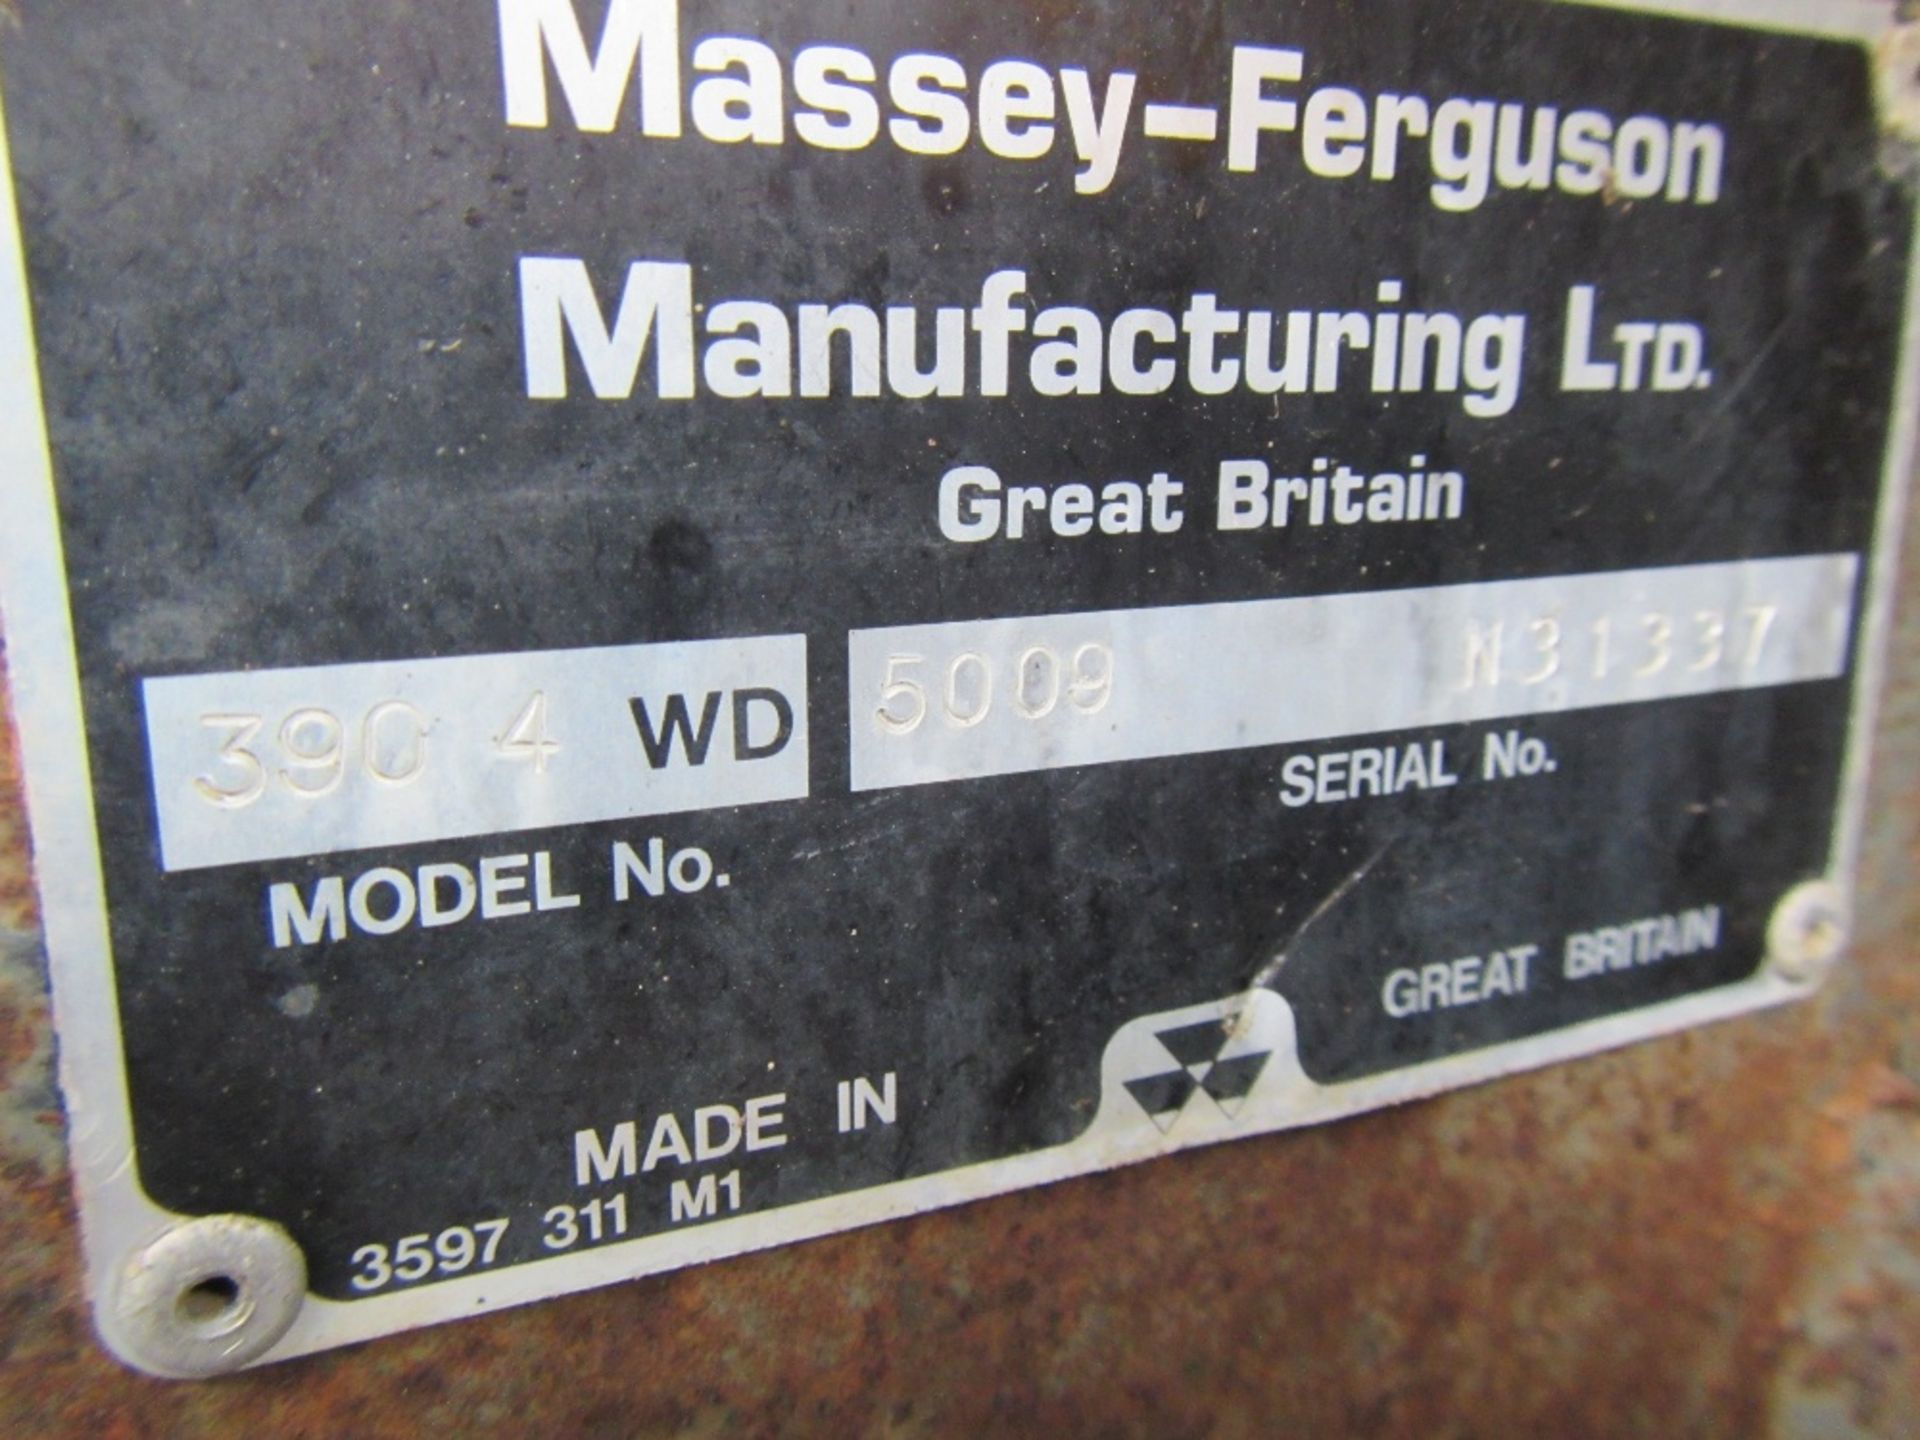 Massey Ferguson 390 4wd Tractor with 3 stick gearbox. Reg. No. F433 HFJ - Image 7 of 7